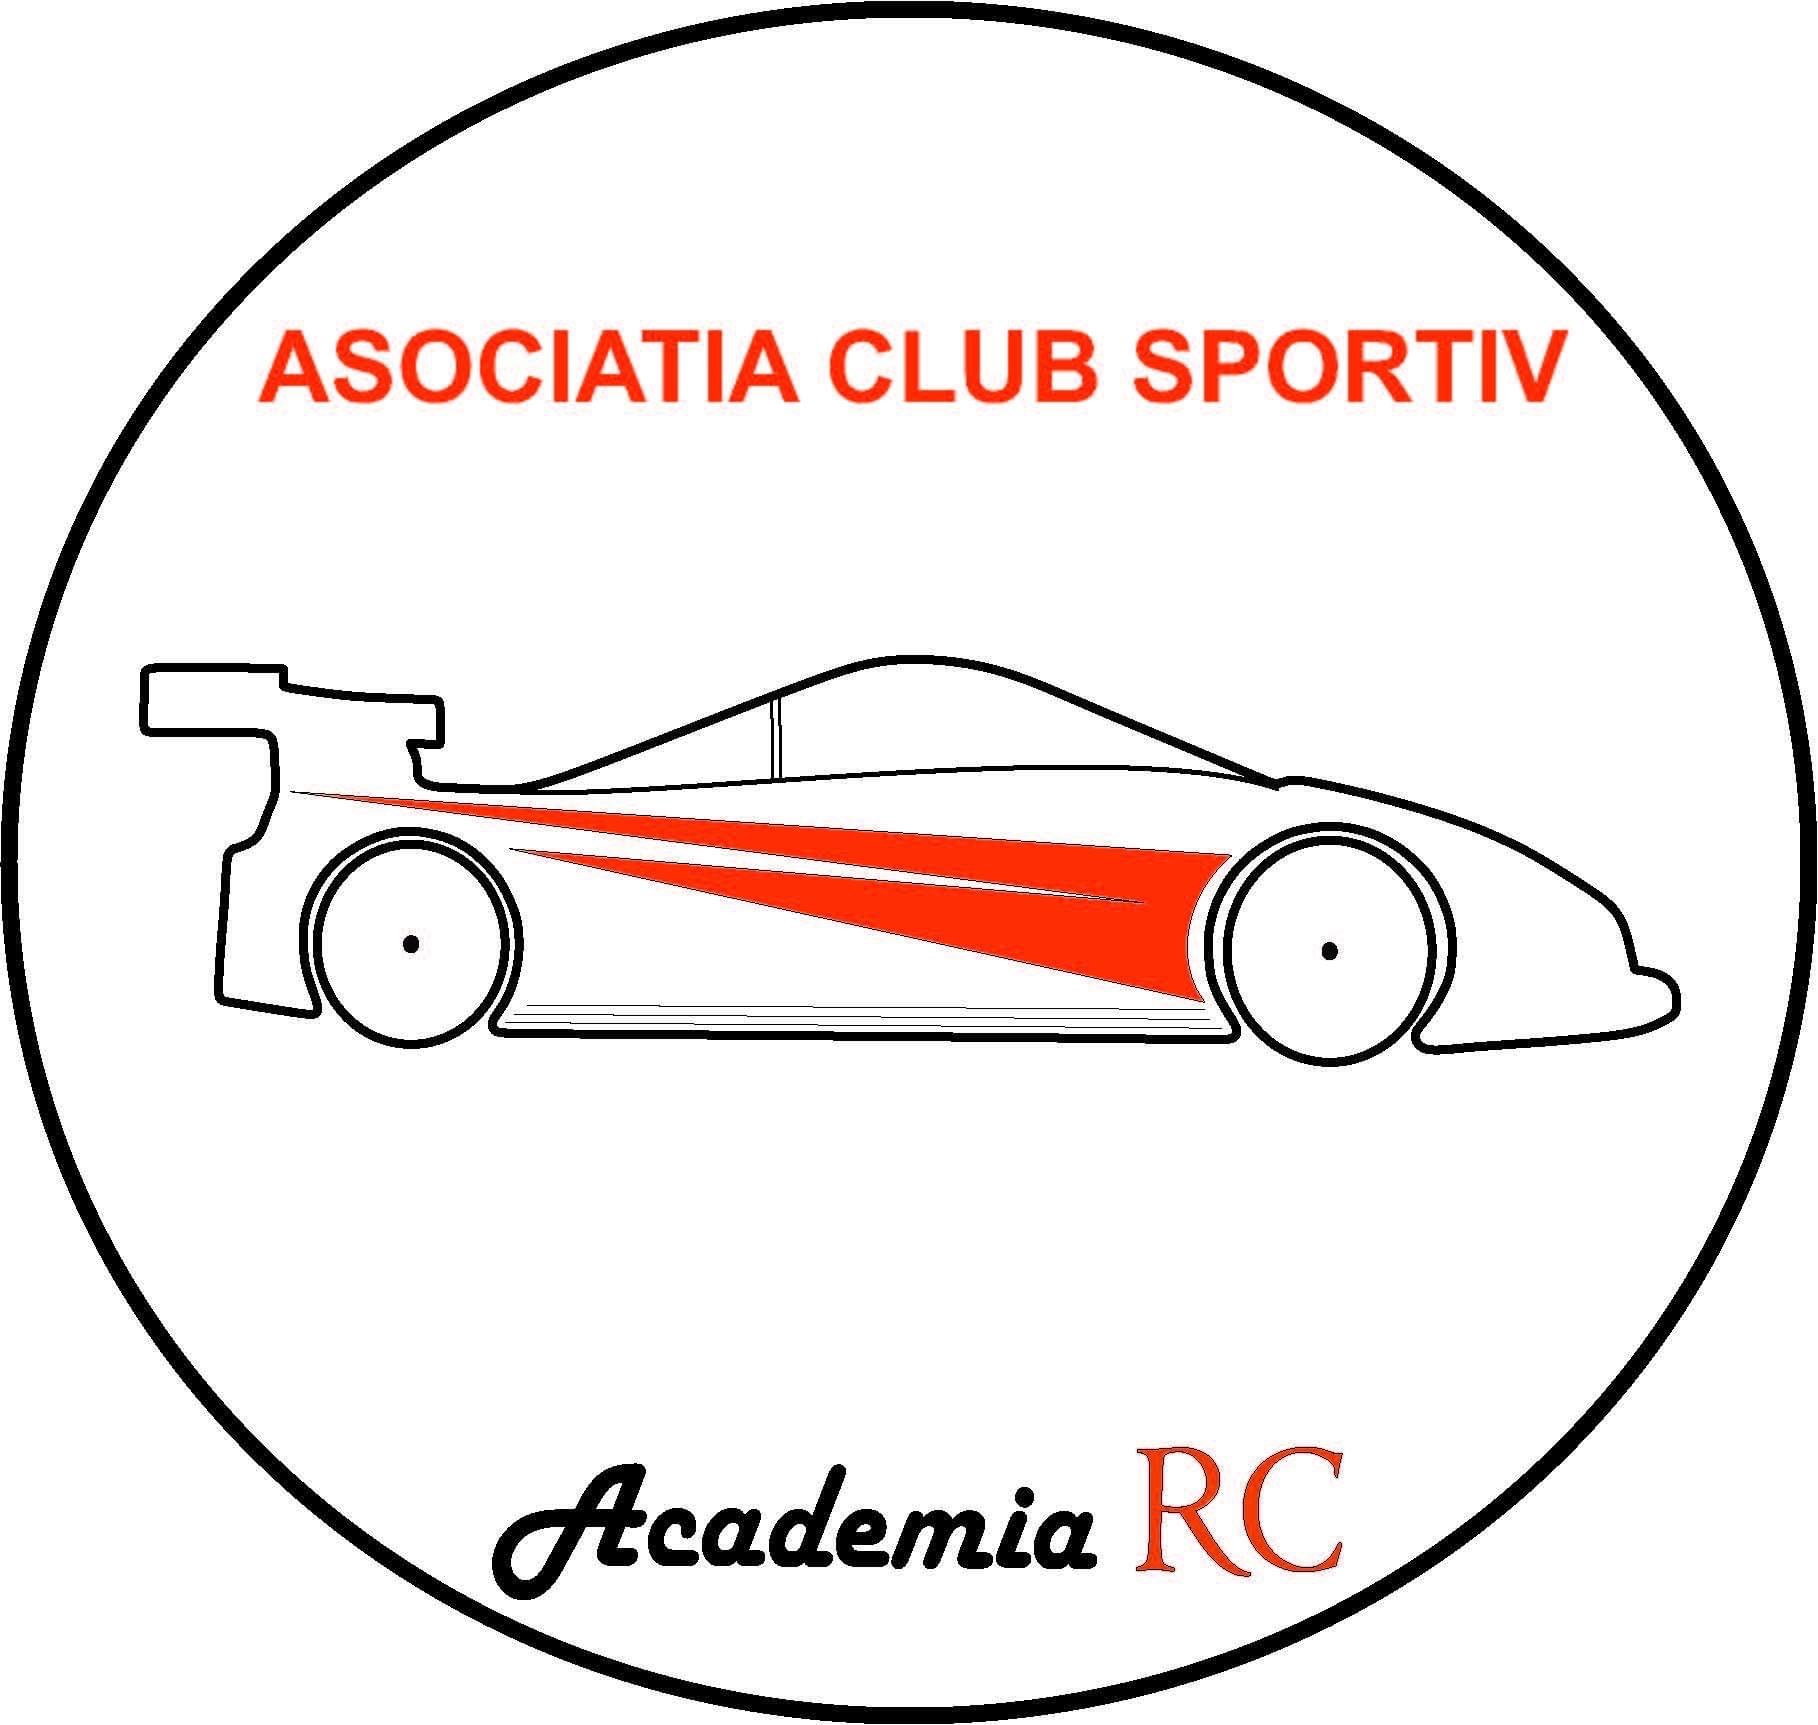 Asociatia Club Sportiv Academia RC logo